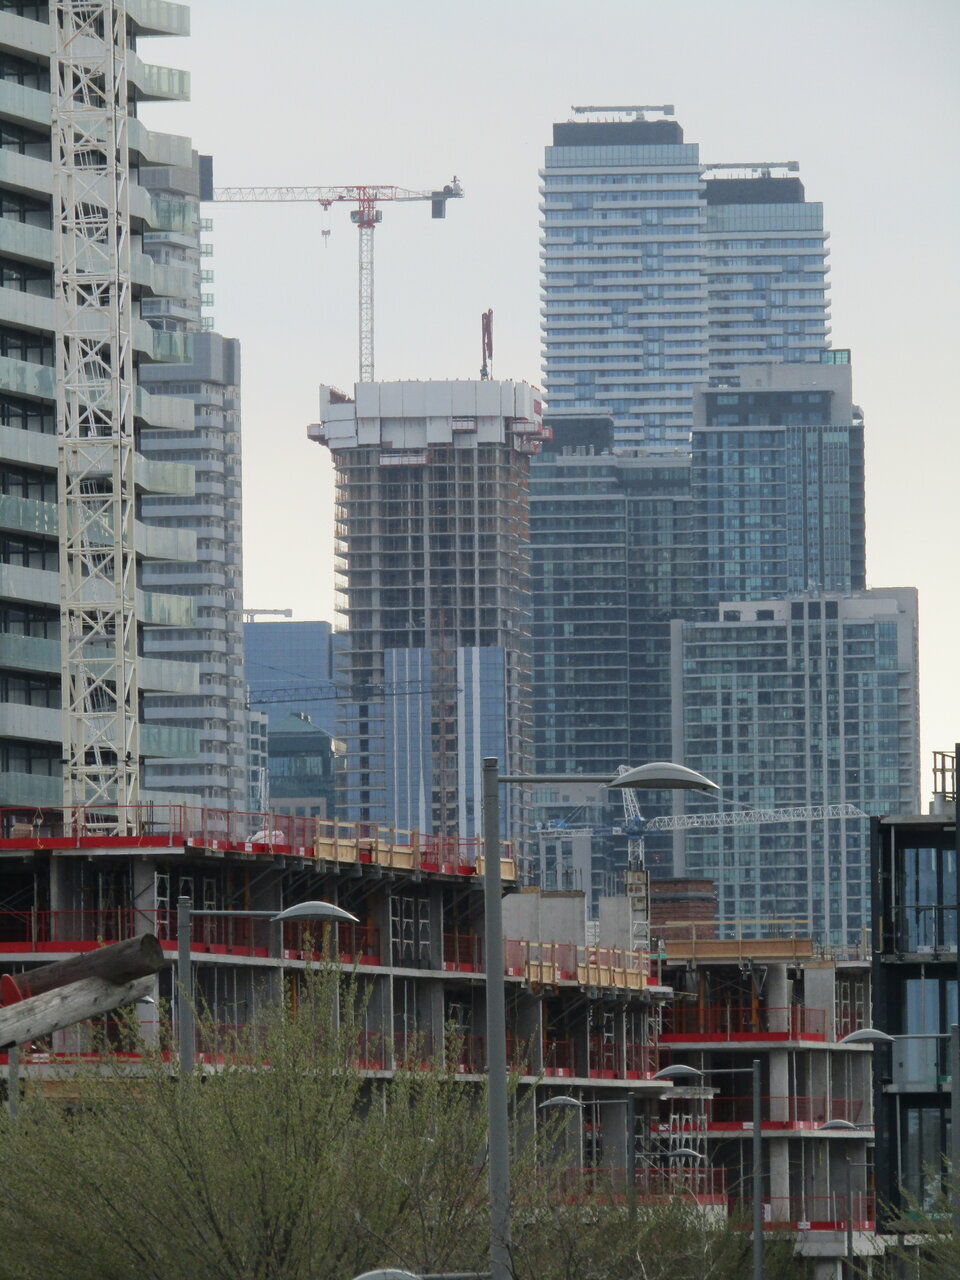 Covid-19, coronavirus, housing market, construction, GTA, Toronto